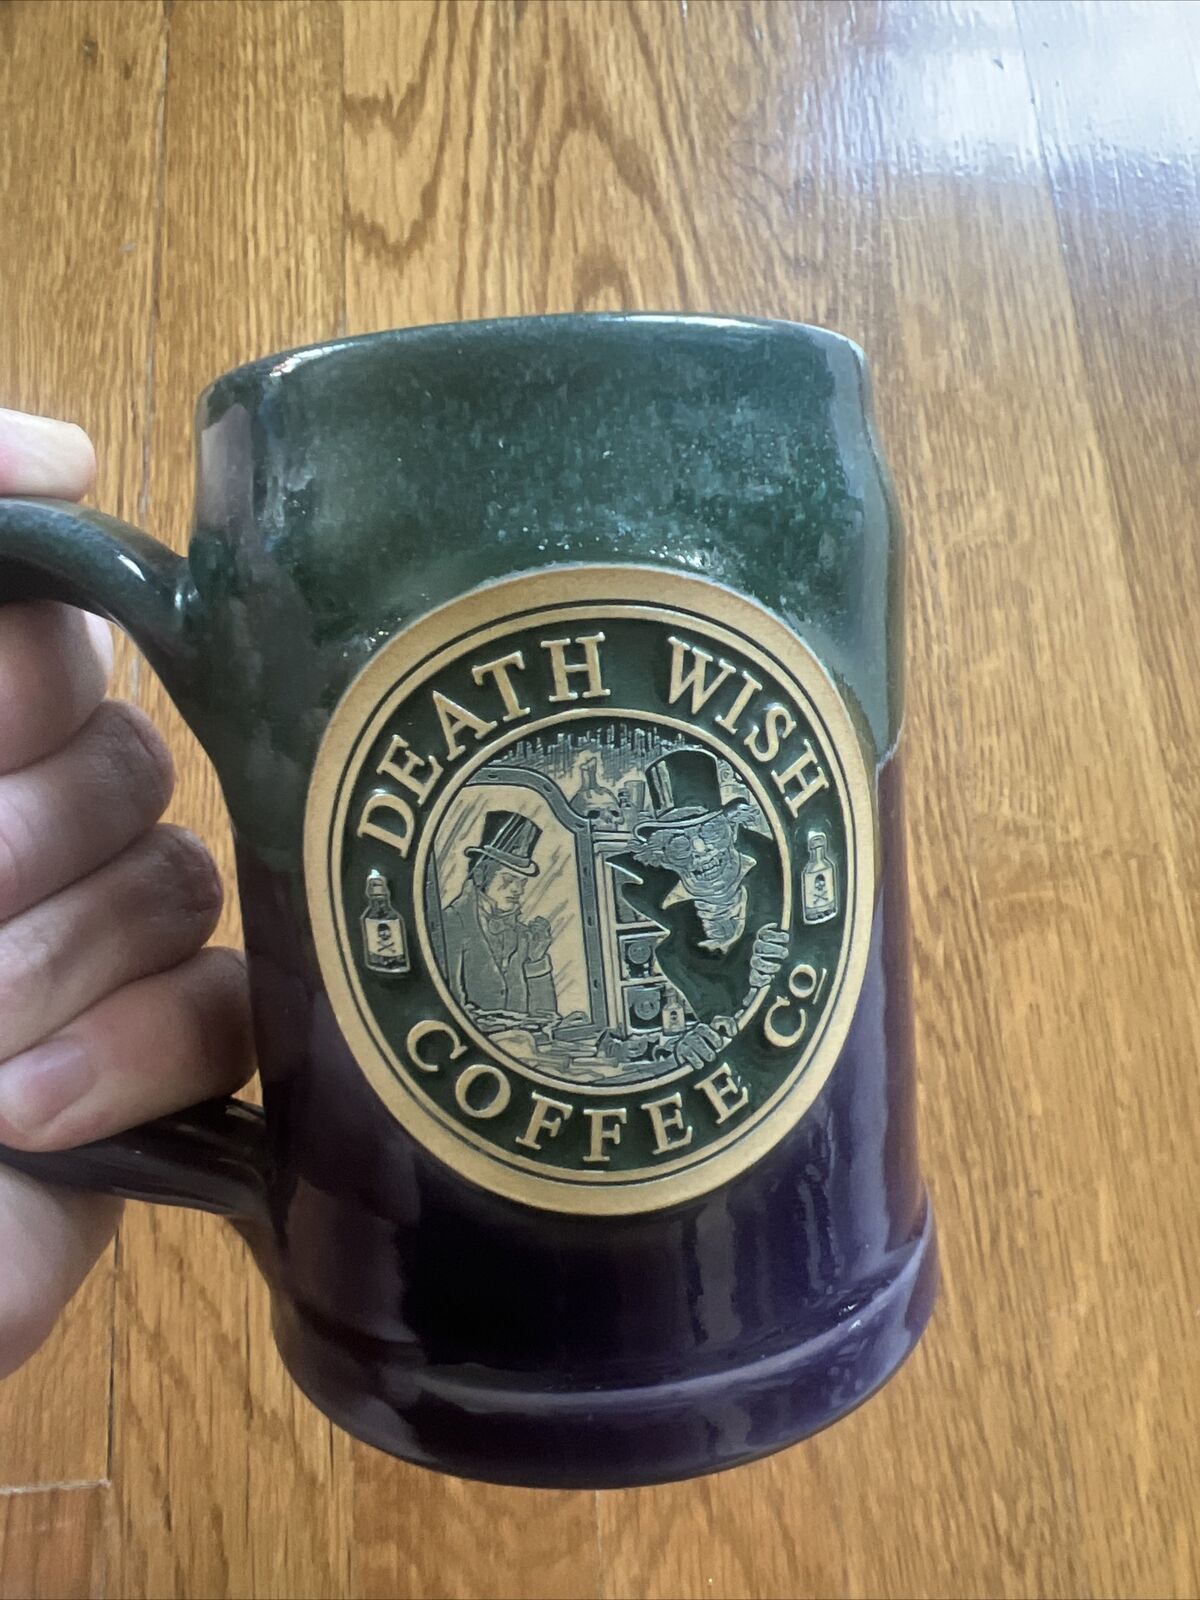 Death Wish Coffee Company Jekyll & Hyde Double Logo Mug, #27/4000 low number